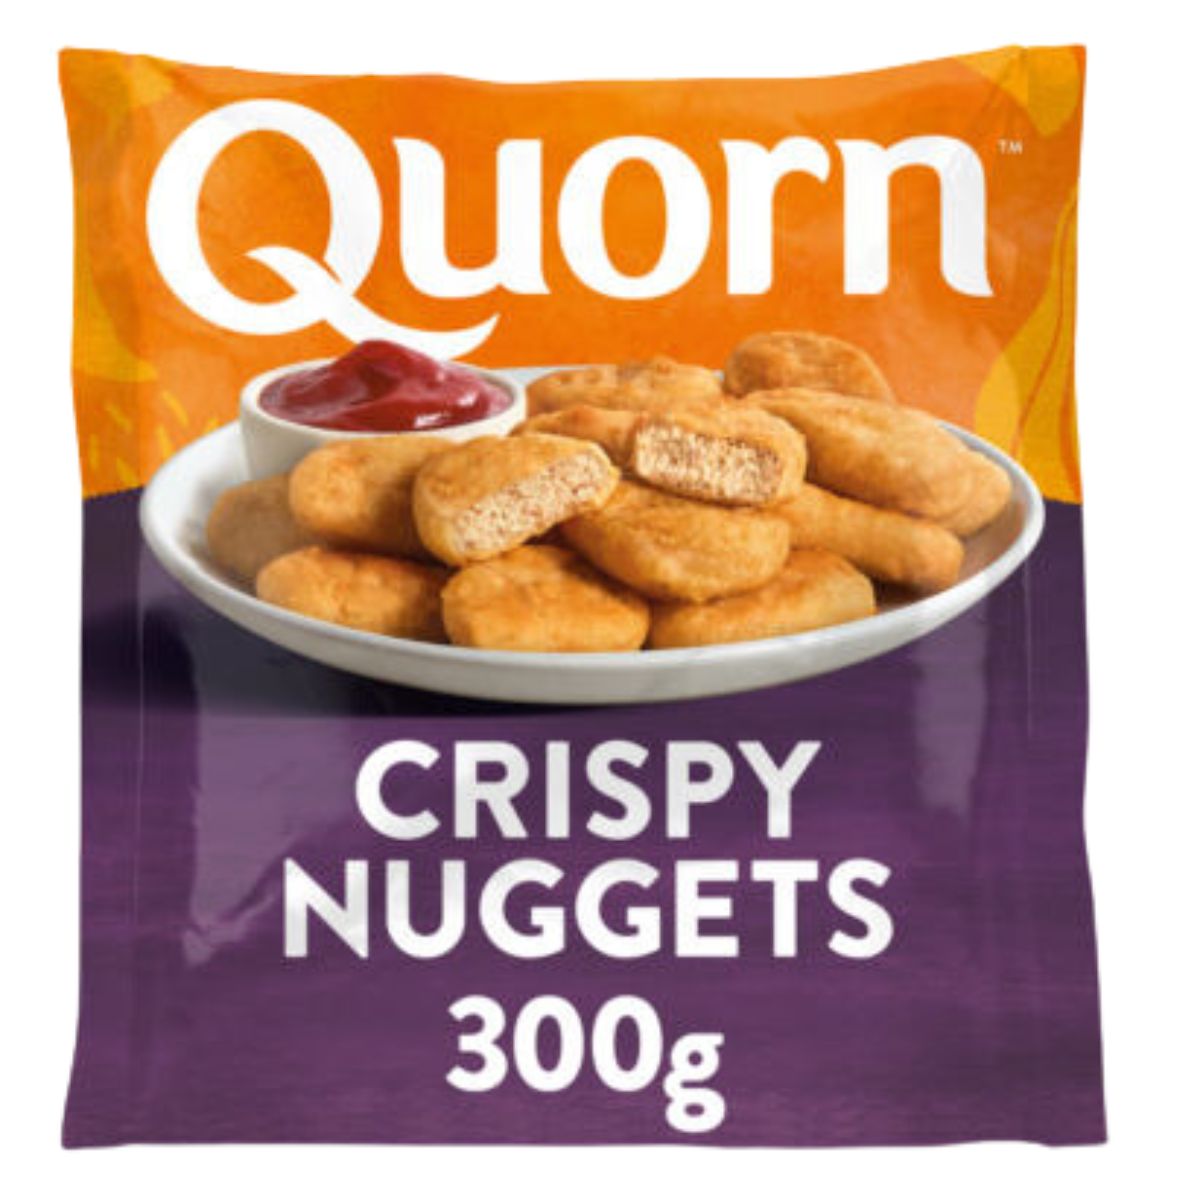 Quorn - Crispy Nuggets - 300g.